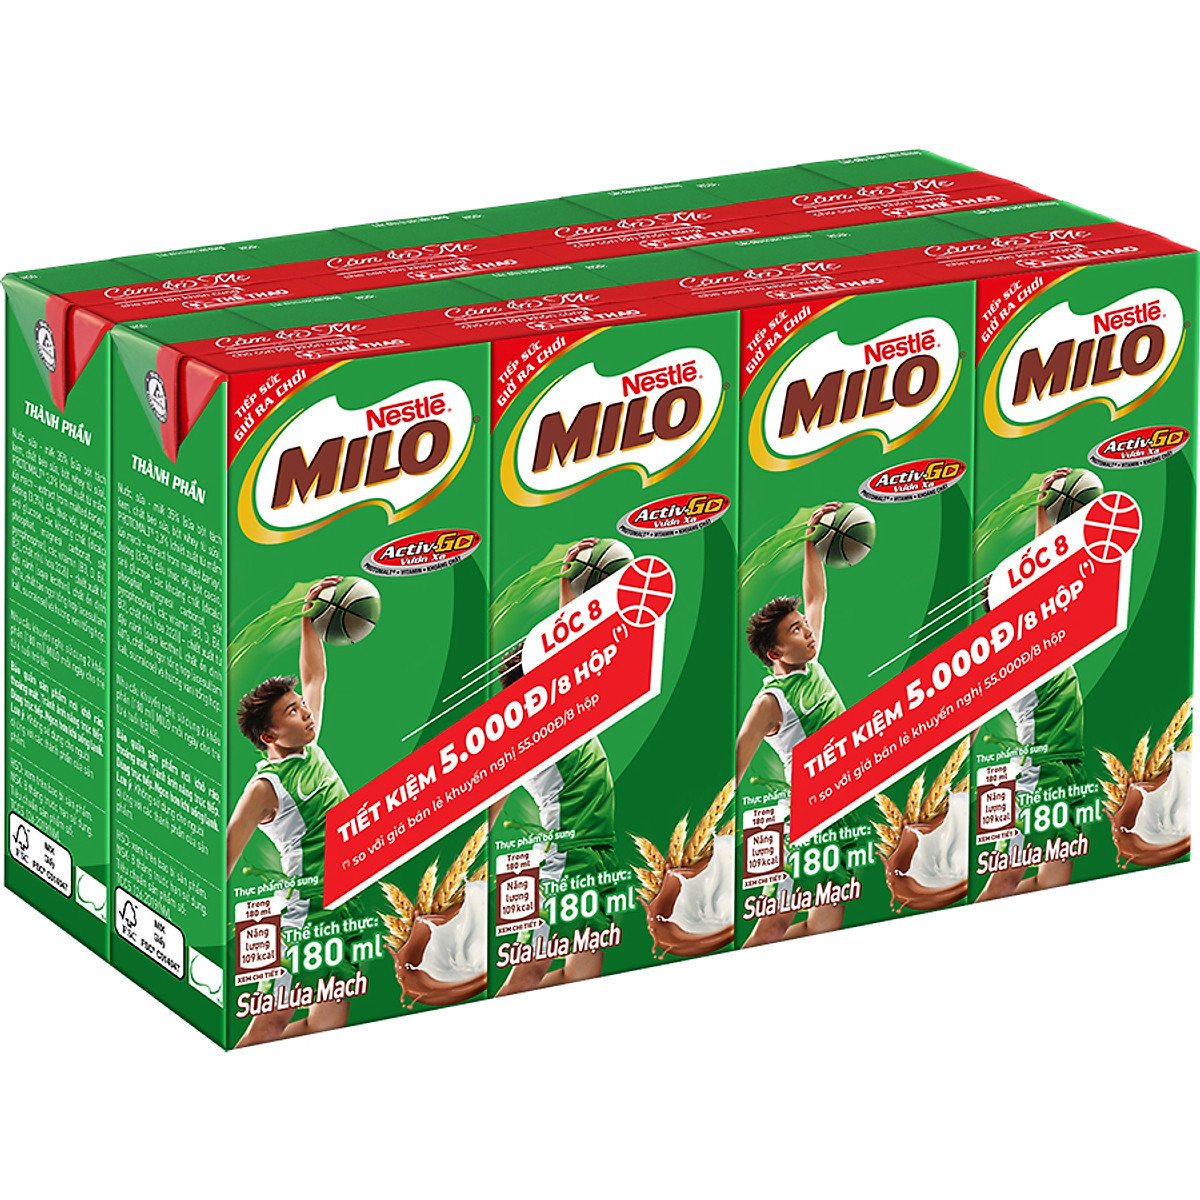 Siêu thị WinMart -Lốc 8 hộp sữa lúa mạch Nestle Milo 180ml